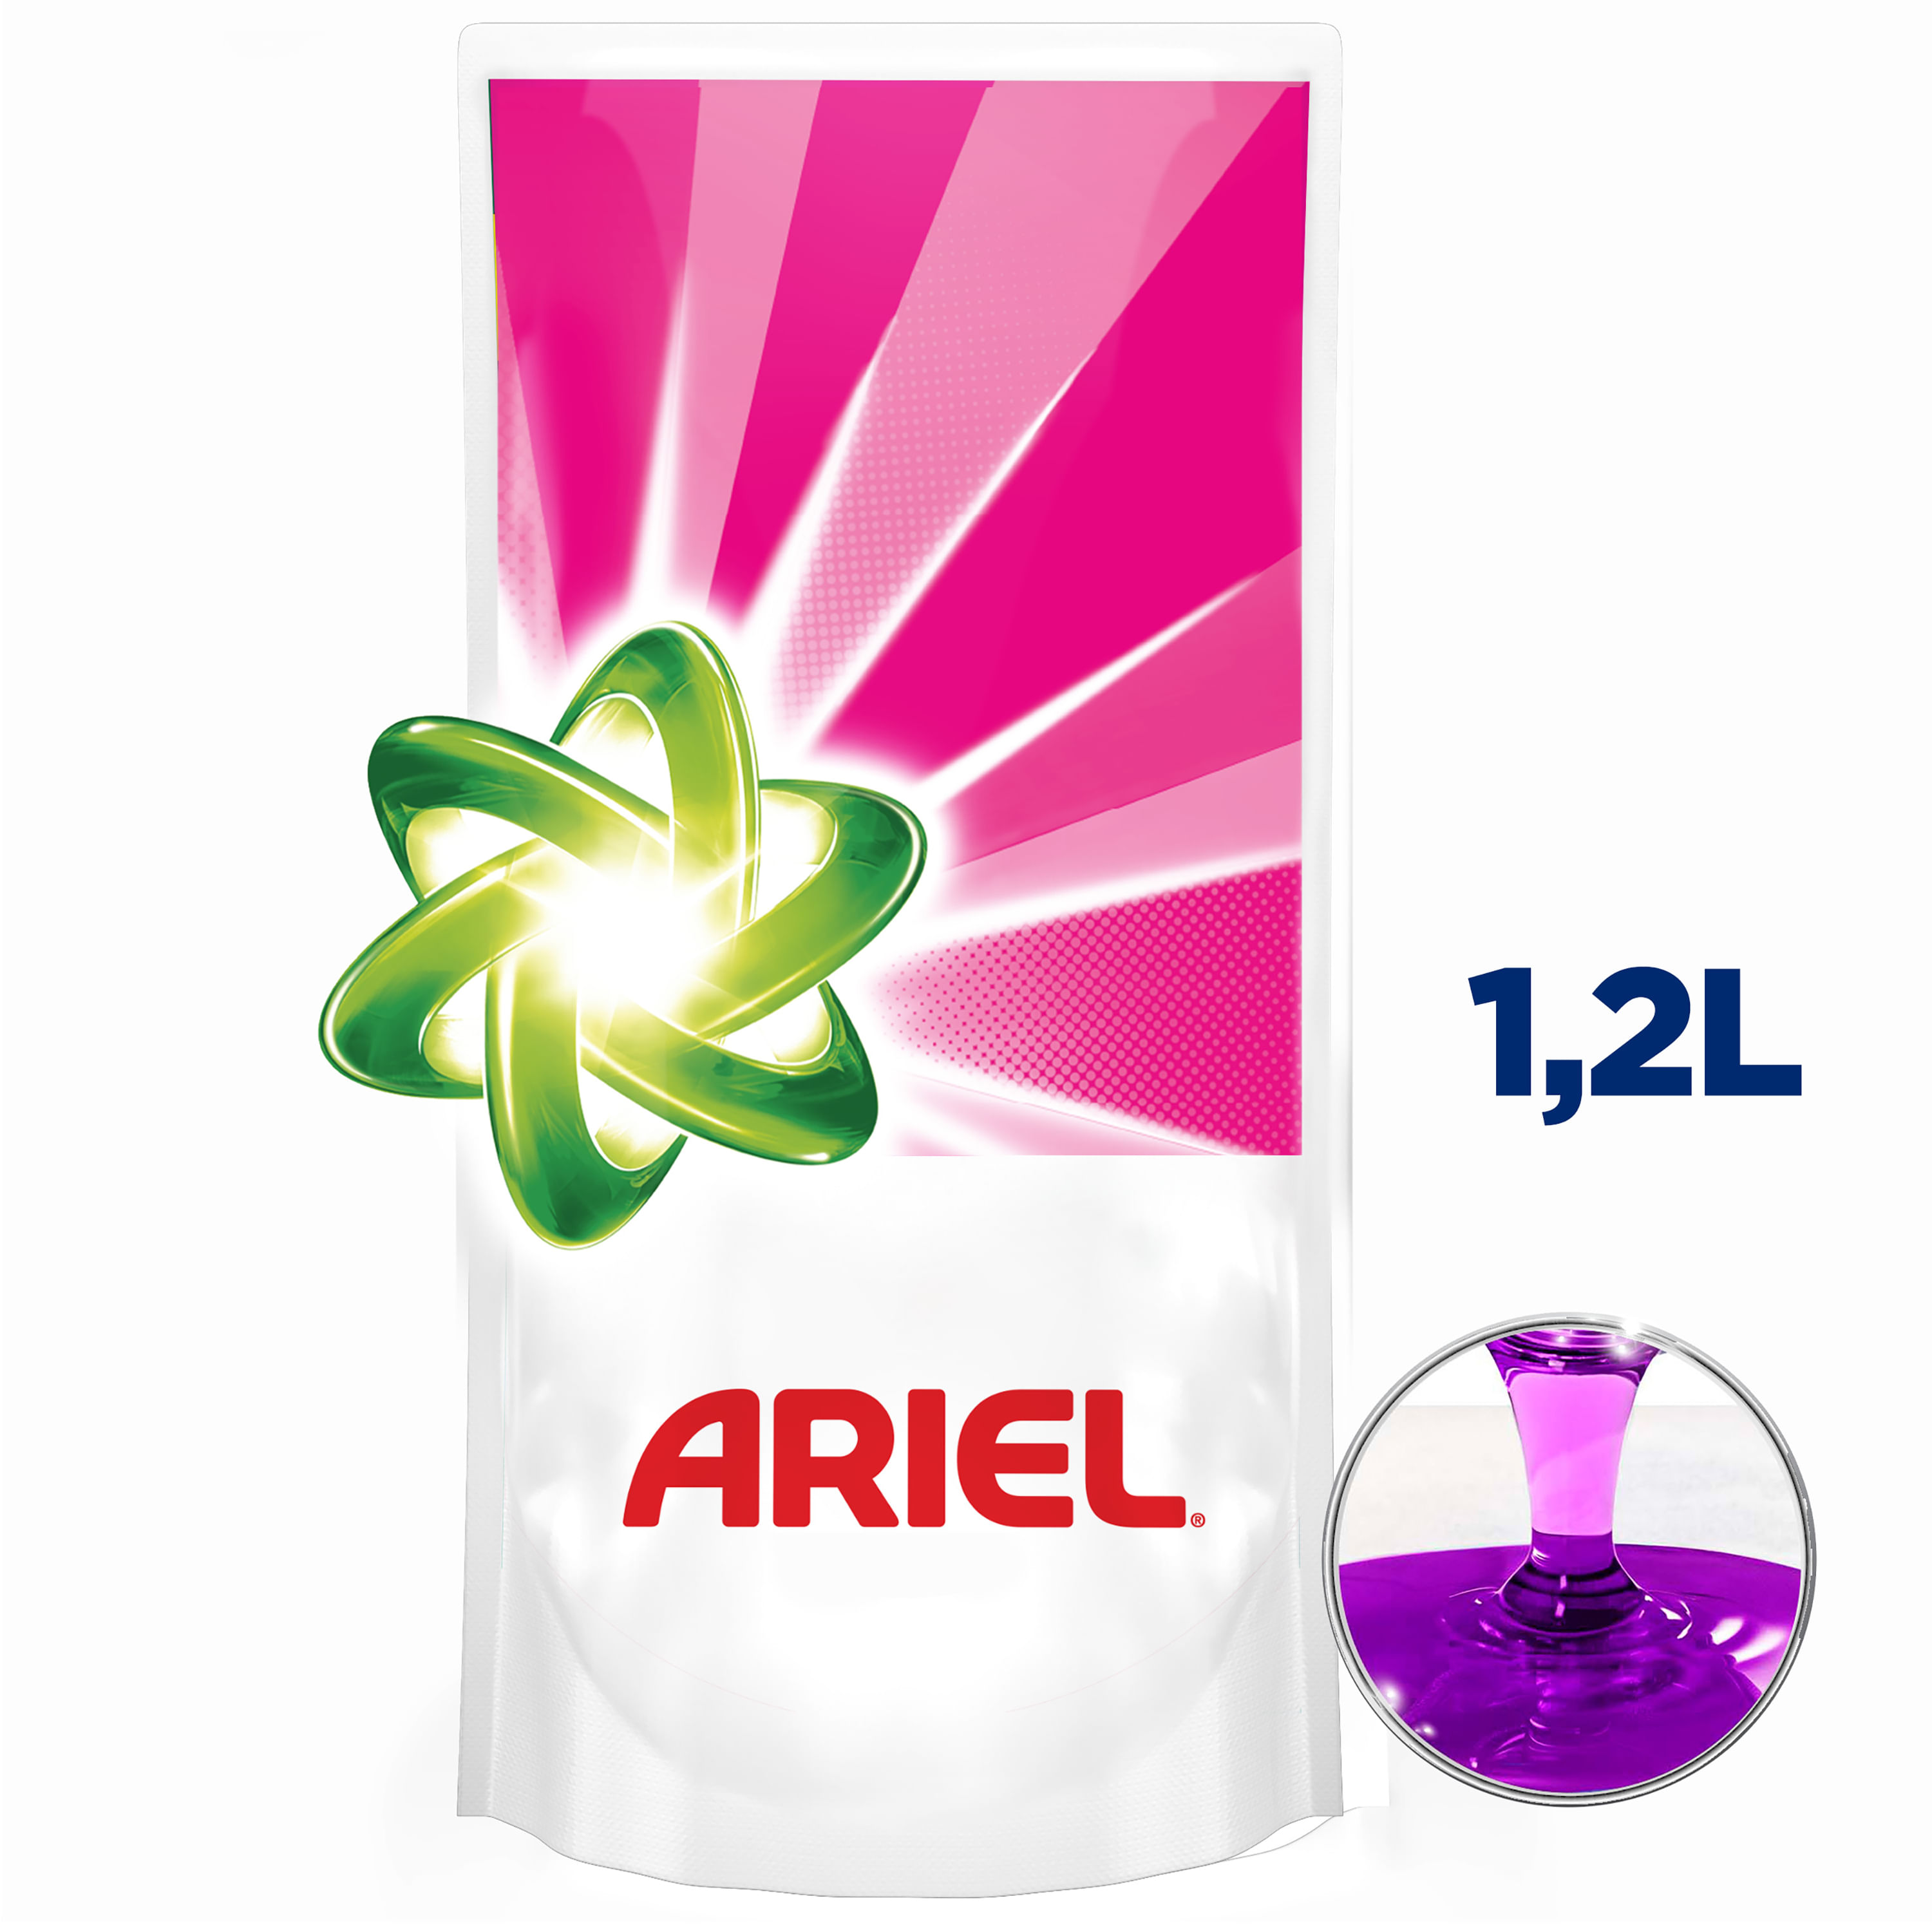 Comprar Detergente Líquido Ariel Revitacolor - 1.8Lt